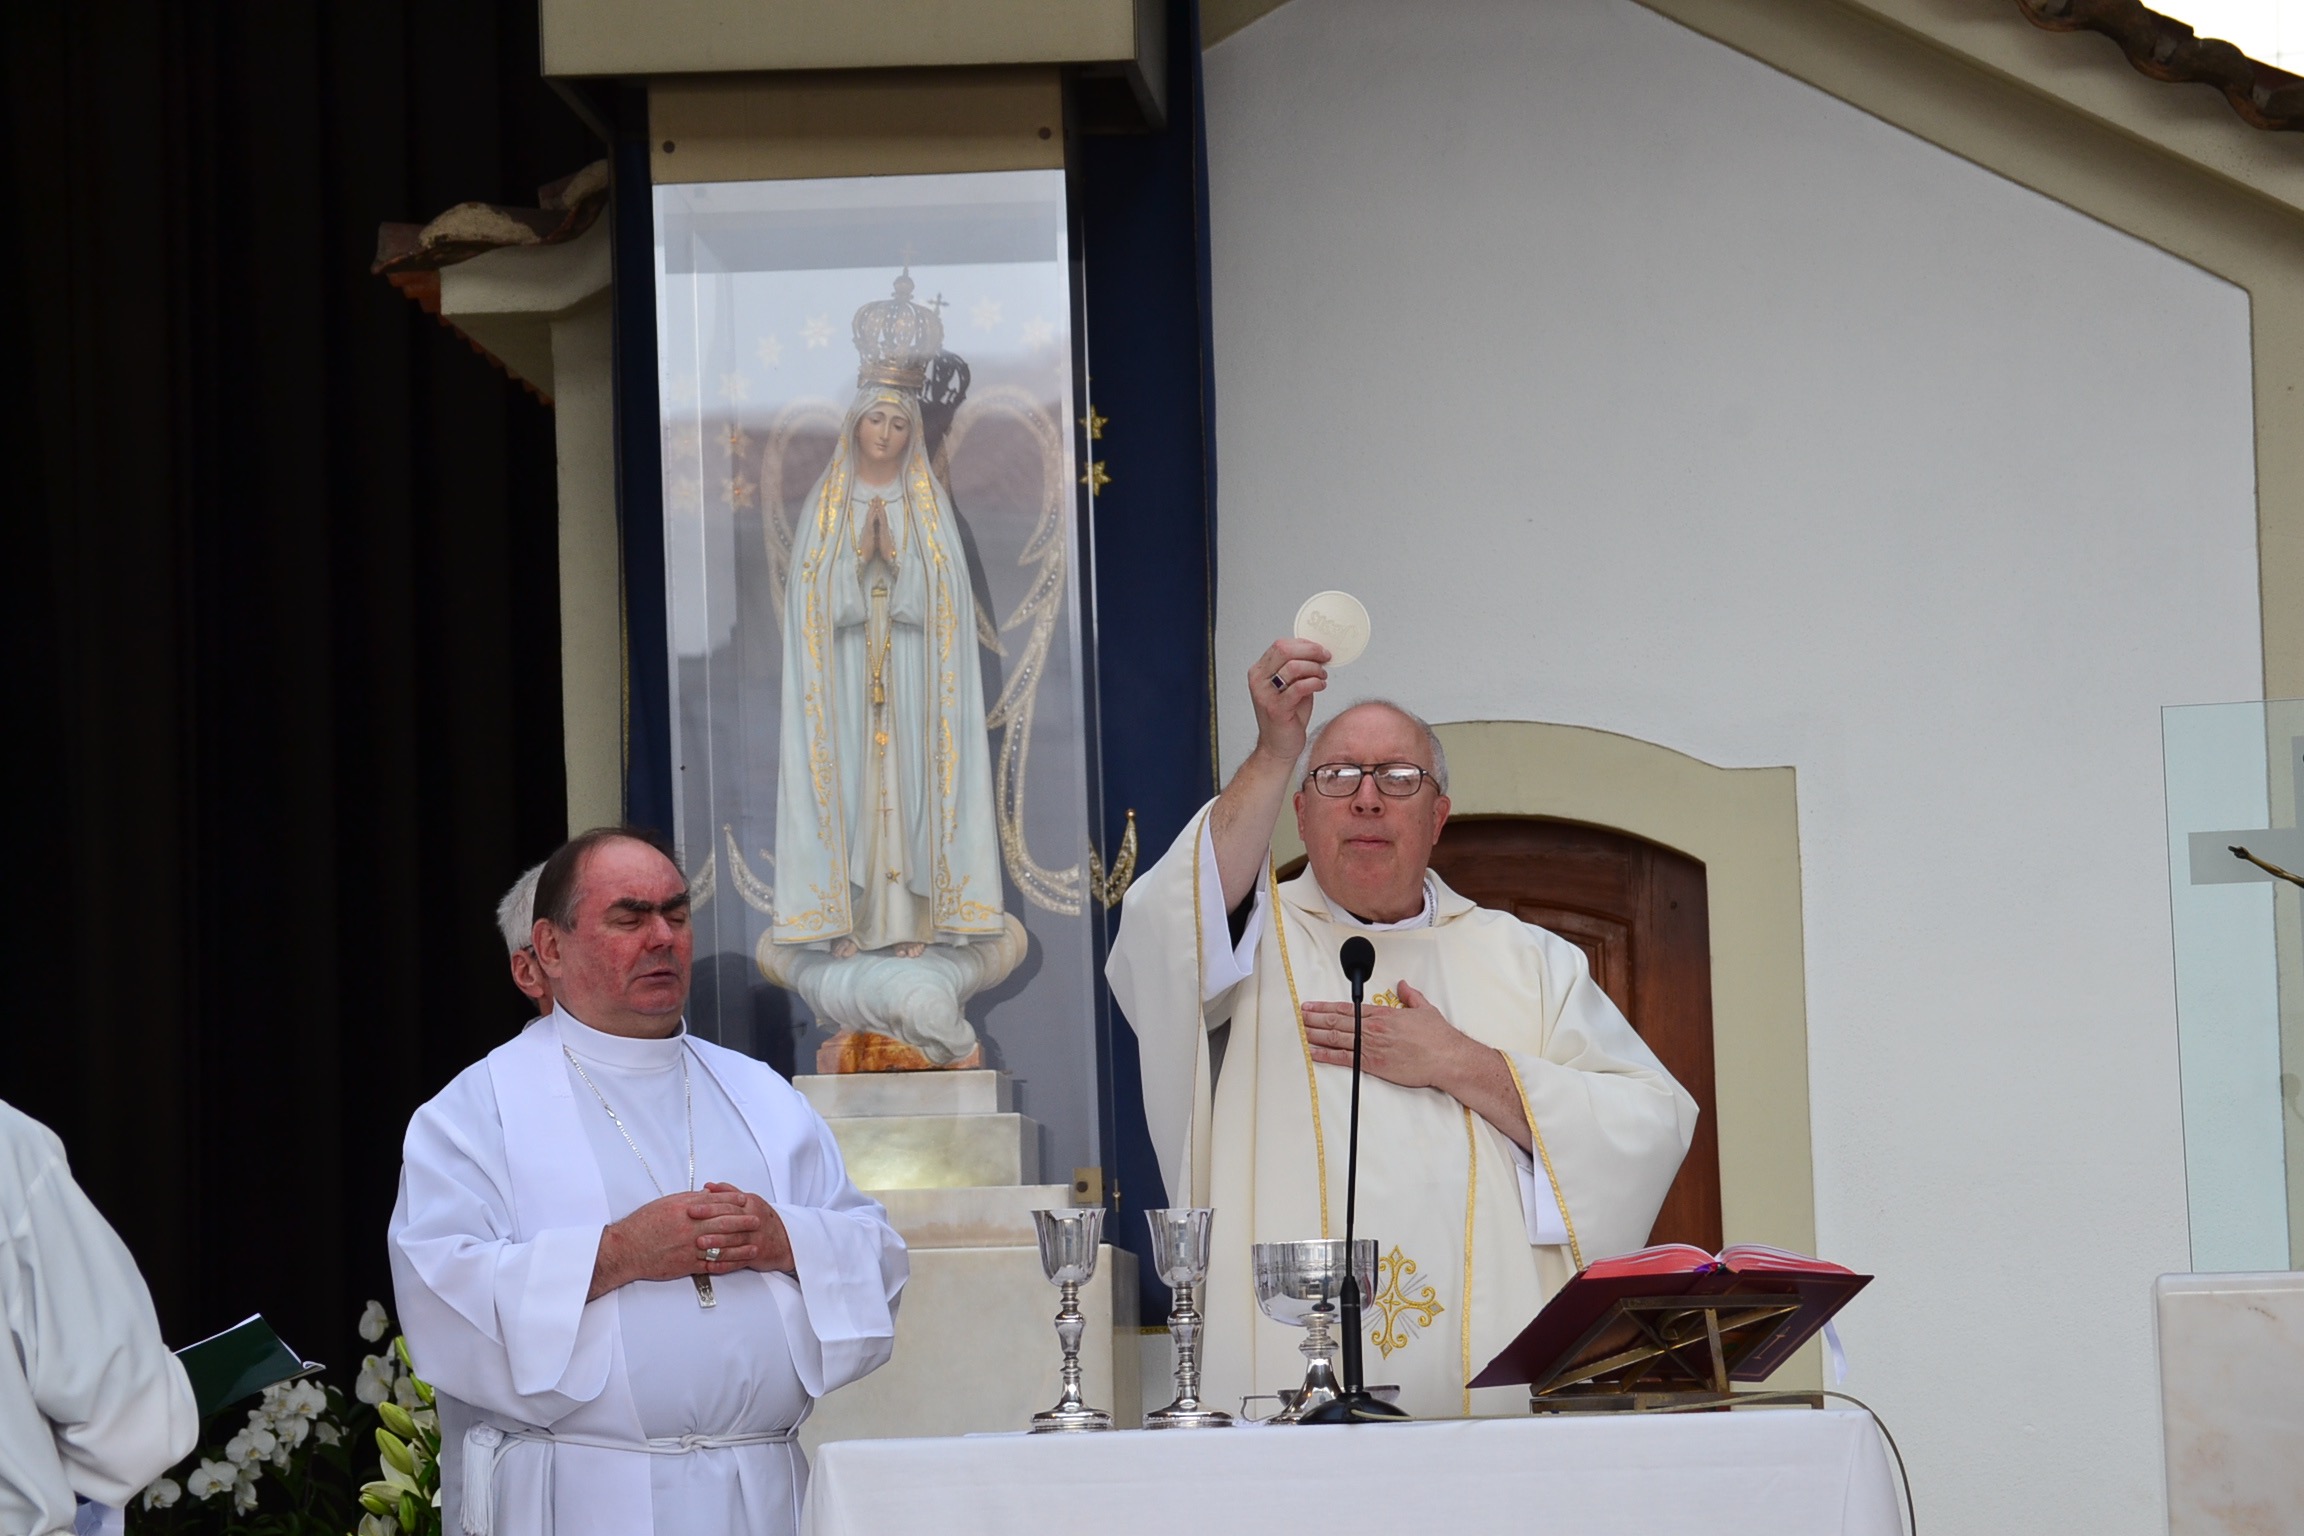 Bishop Joseph Binzer presiding at the English speaking Mass at Fatima. (CT Photo/Greg Hartman)